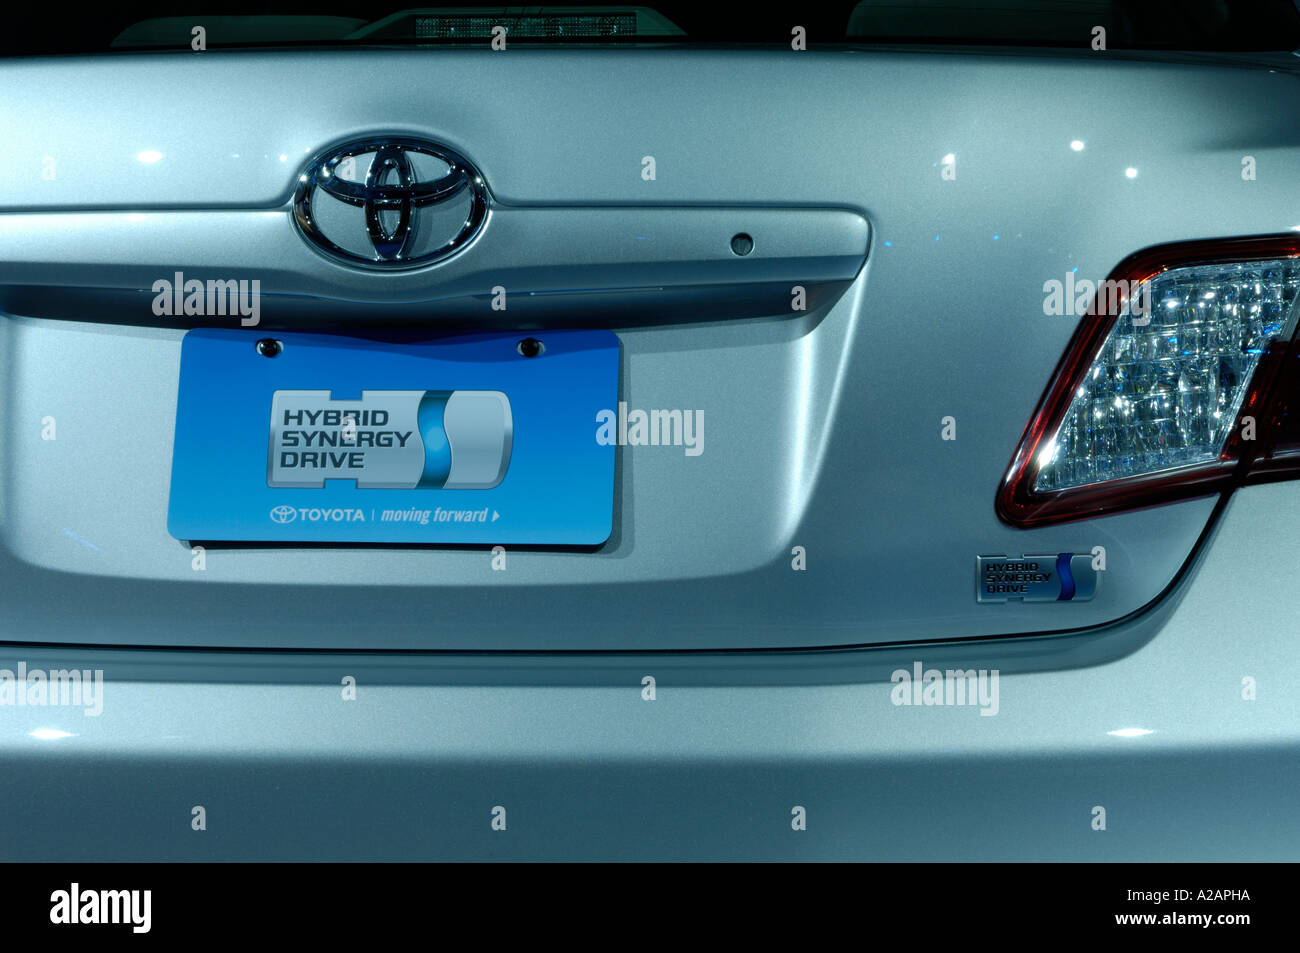 2007 Toyota Camry Hybrid hinten mit Hybrid Synergy Drive Kfz-Kennzeichen Stockfoto